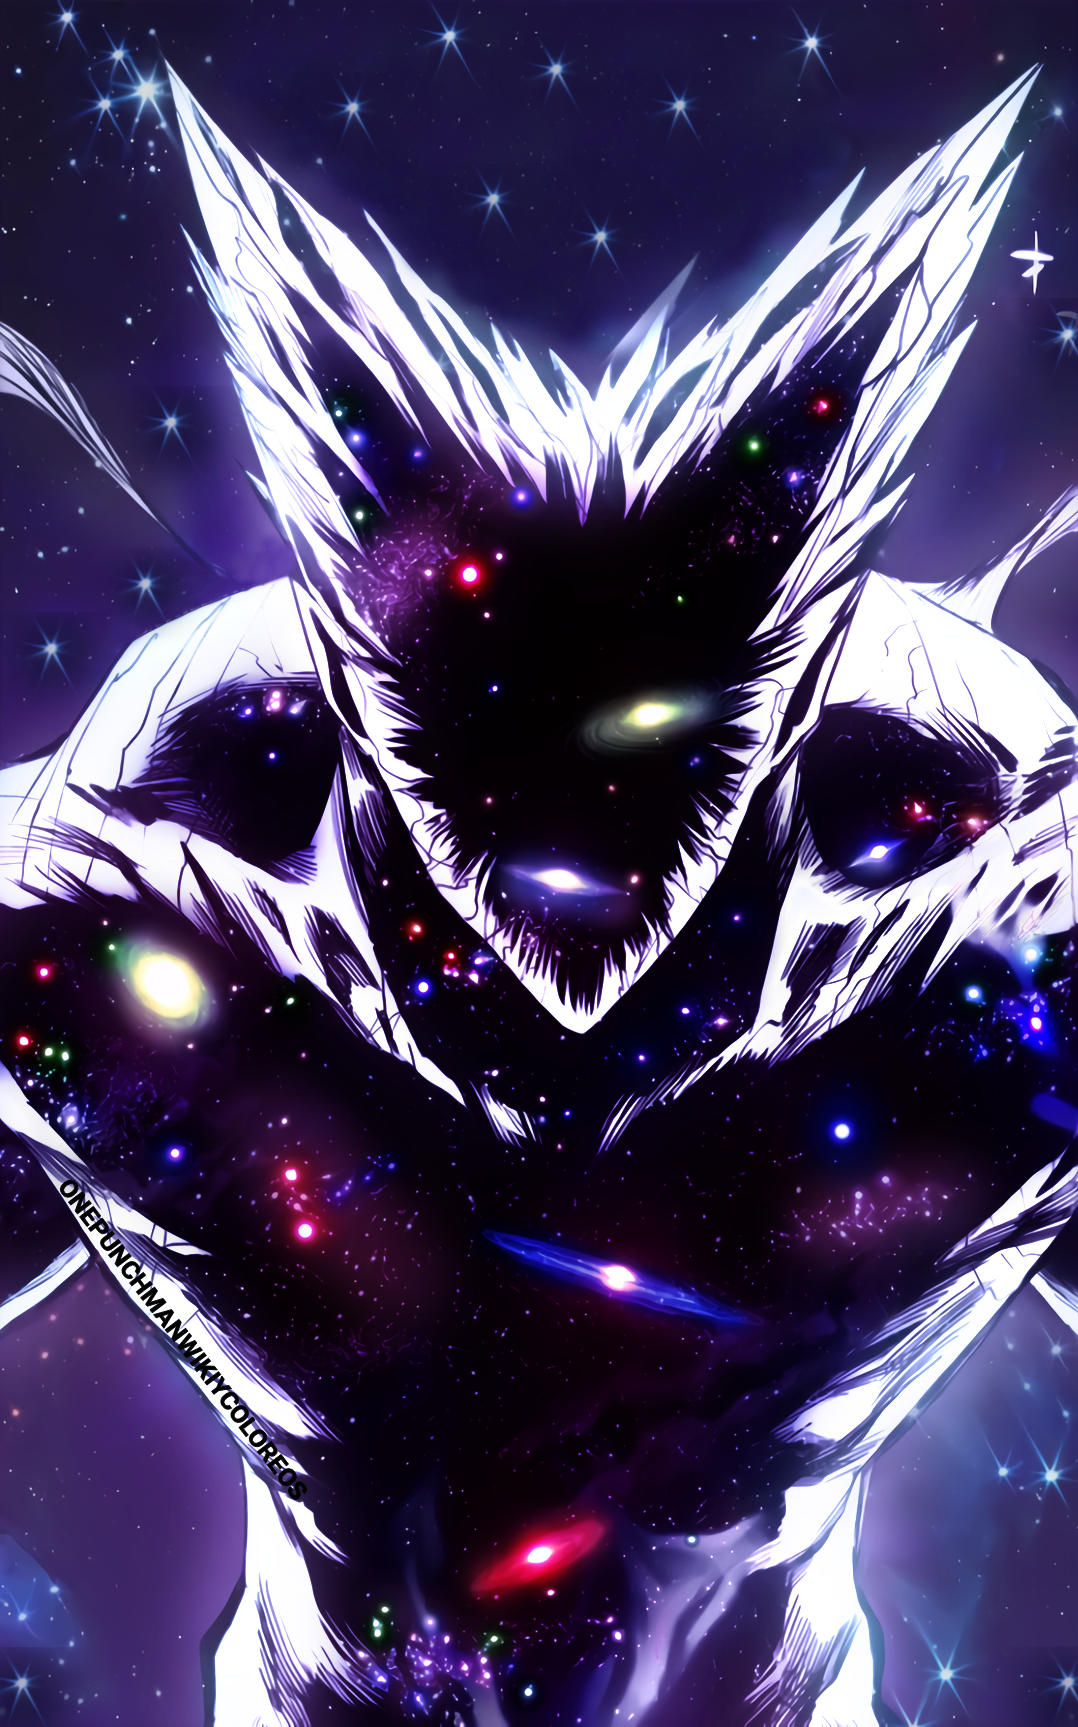 Asura The Destructor vs Cosmic Fear Garou - Battles - Comic Vine